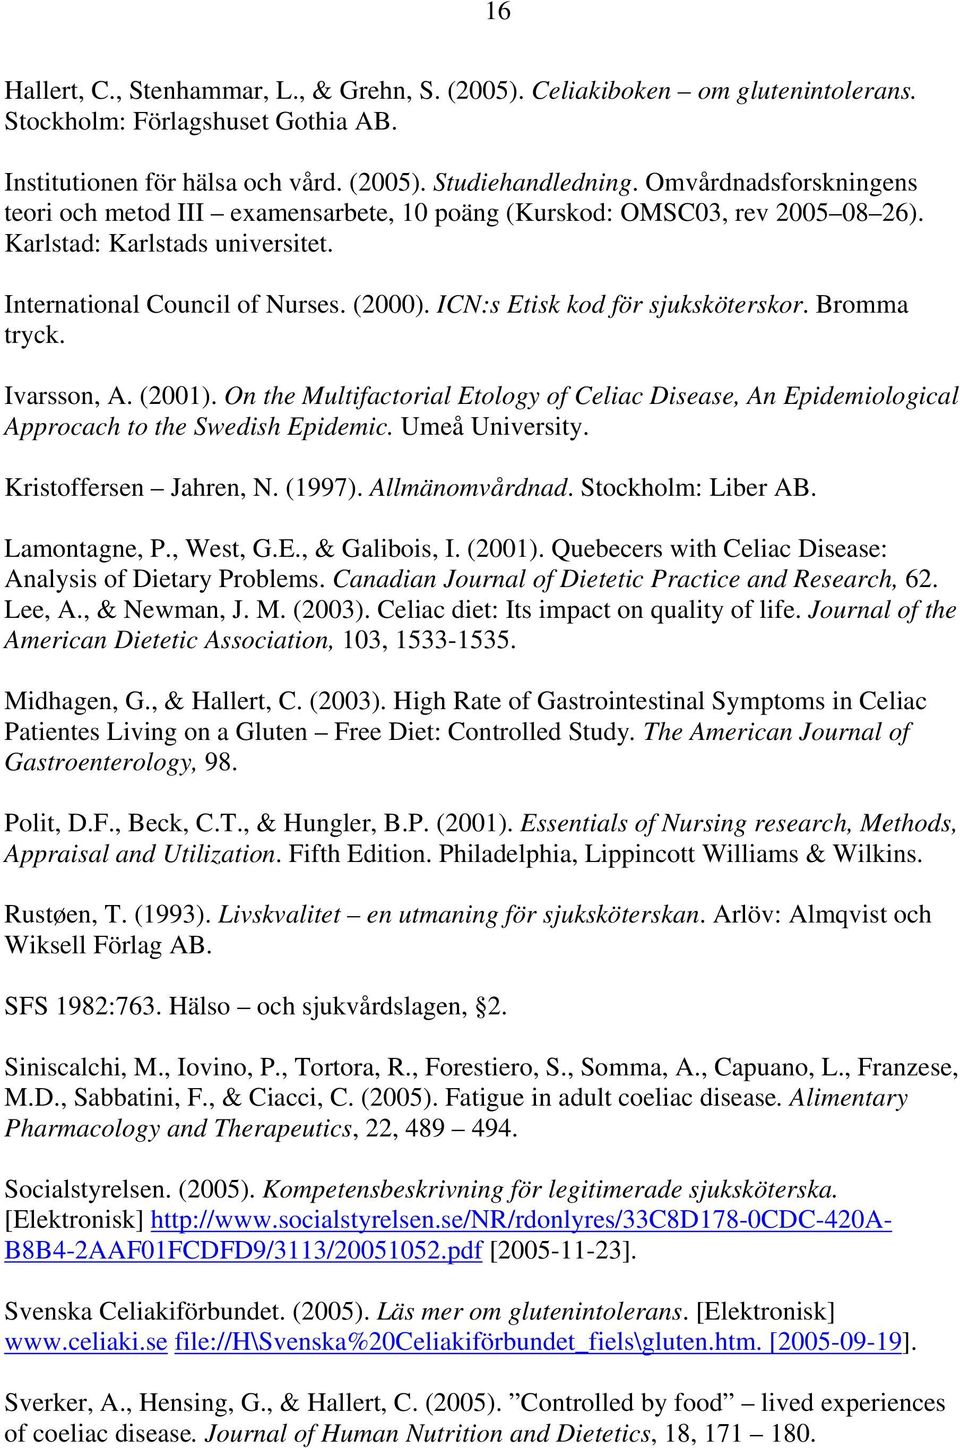 ICN:s Etisk kod för sjuksköterskor. Bromma tryck. Ivarsson, A. (2001). On the Multifactorial Etology of Celiac Disease, An Epidemiological Approcach to the Swedish Epidemic. Umeå University.